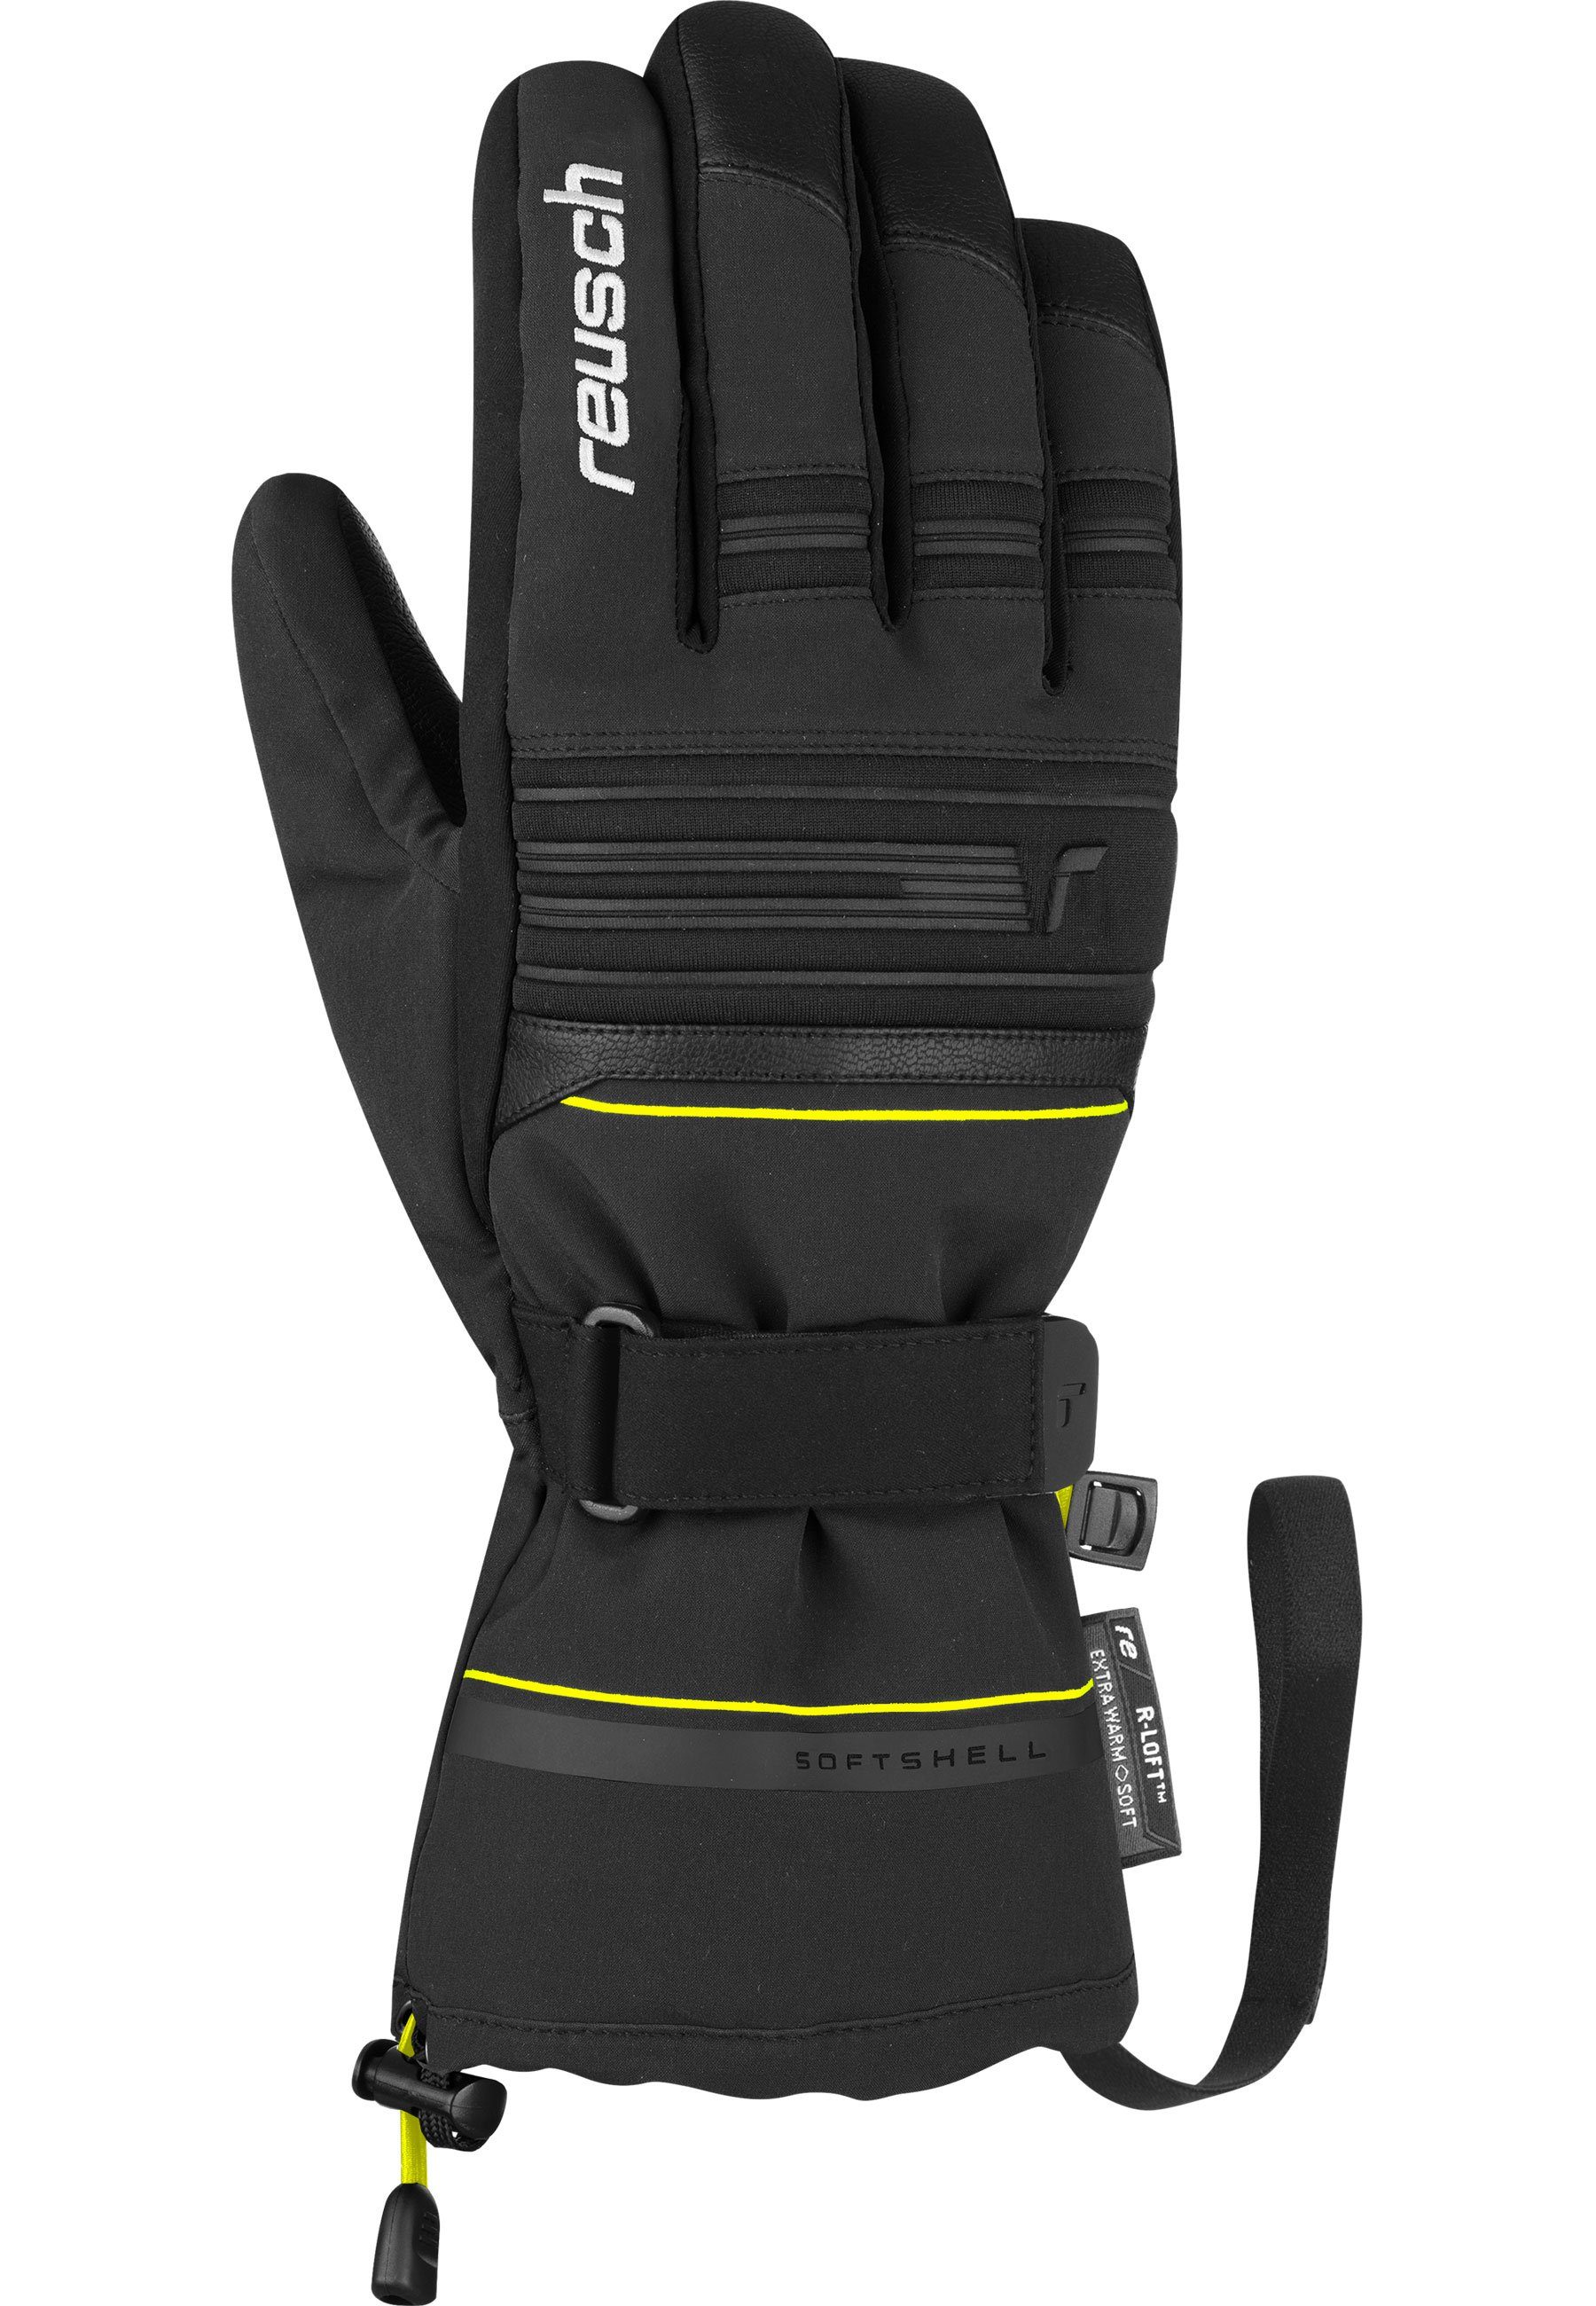 Kondor in Design XT Reusch Skihandschuhe atmungsaktivem und gelb-schwarz wasserdichtem R-TEX®